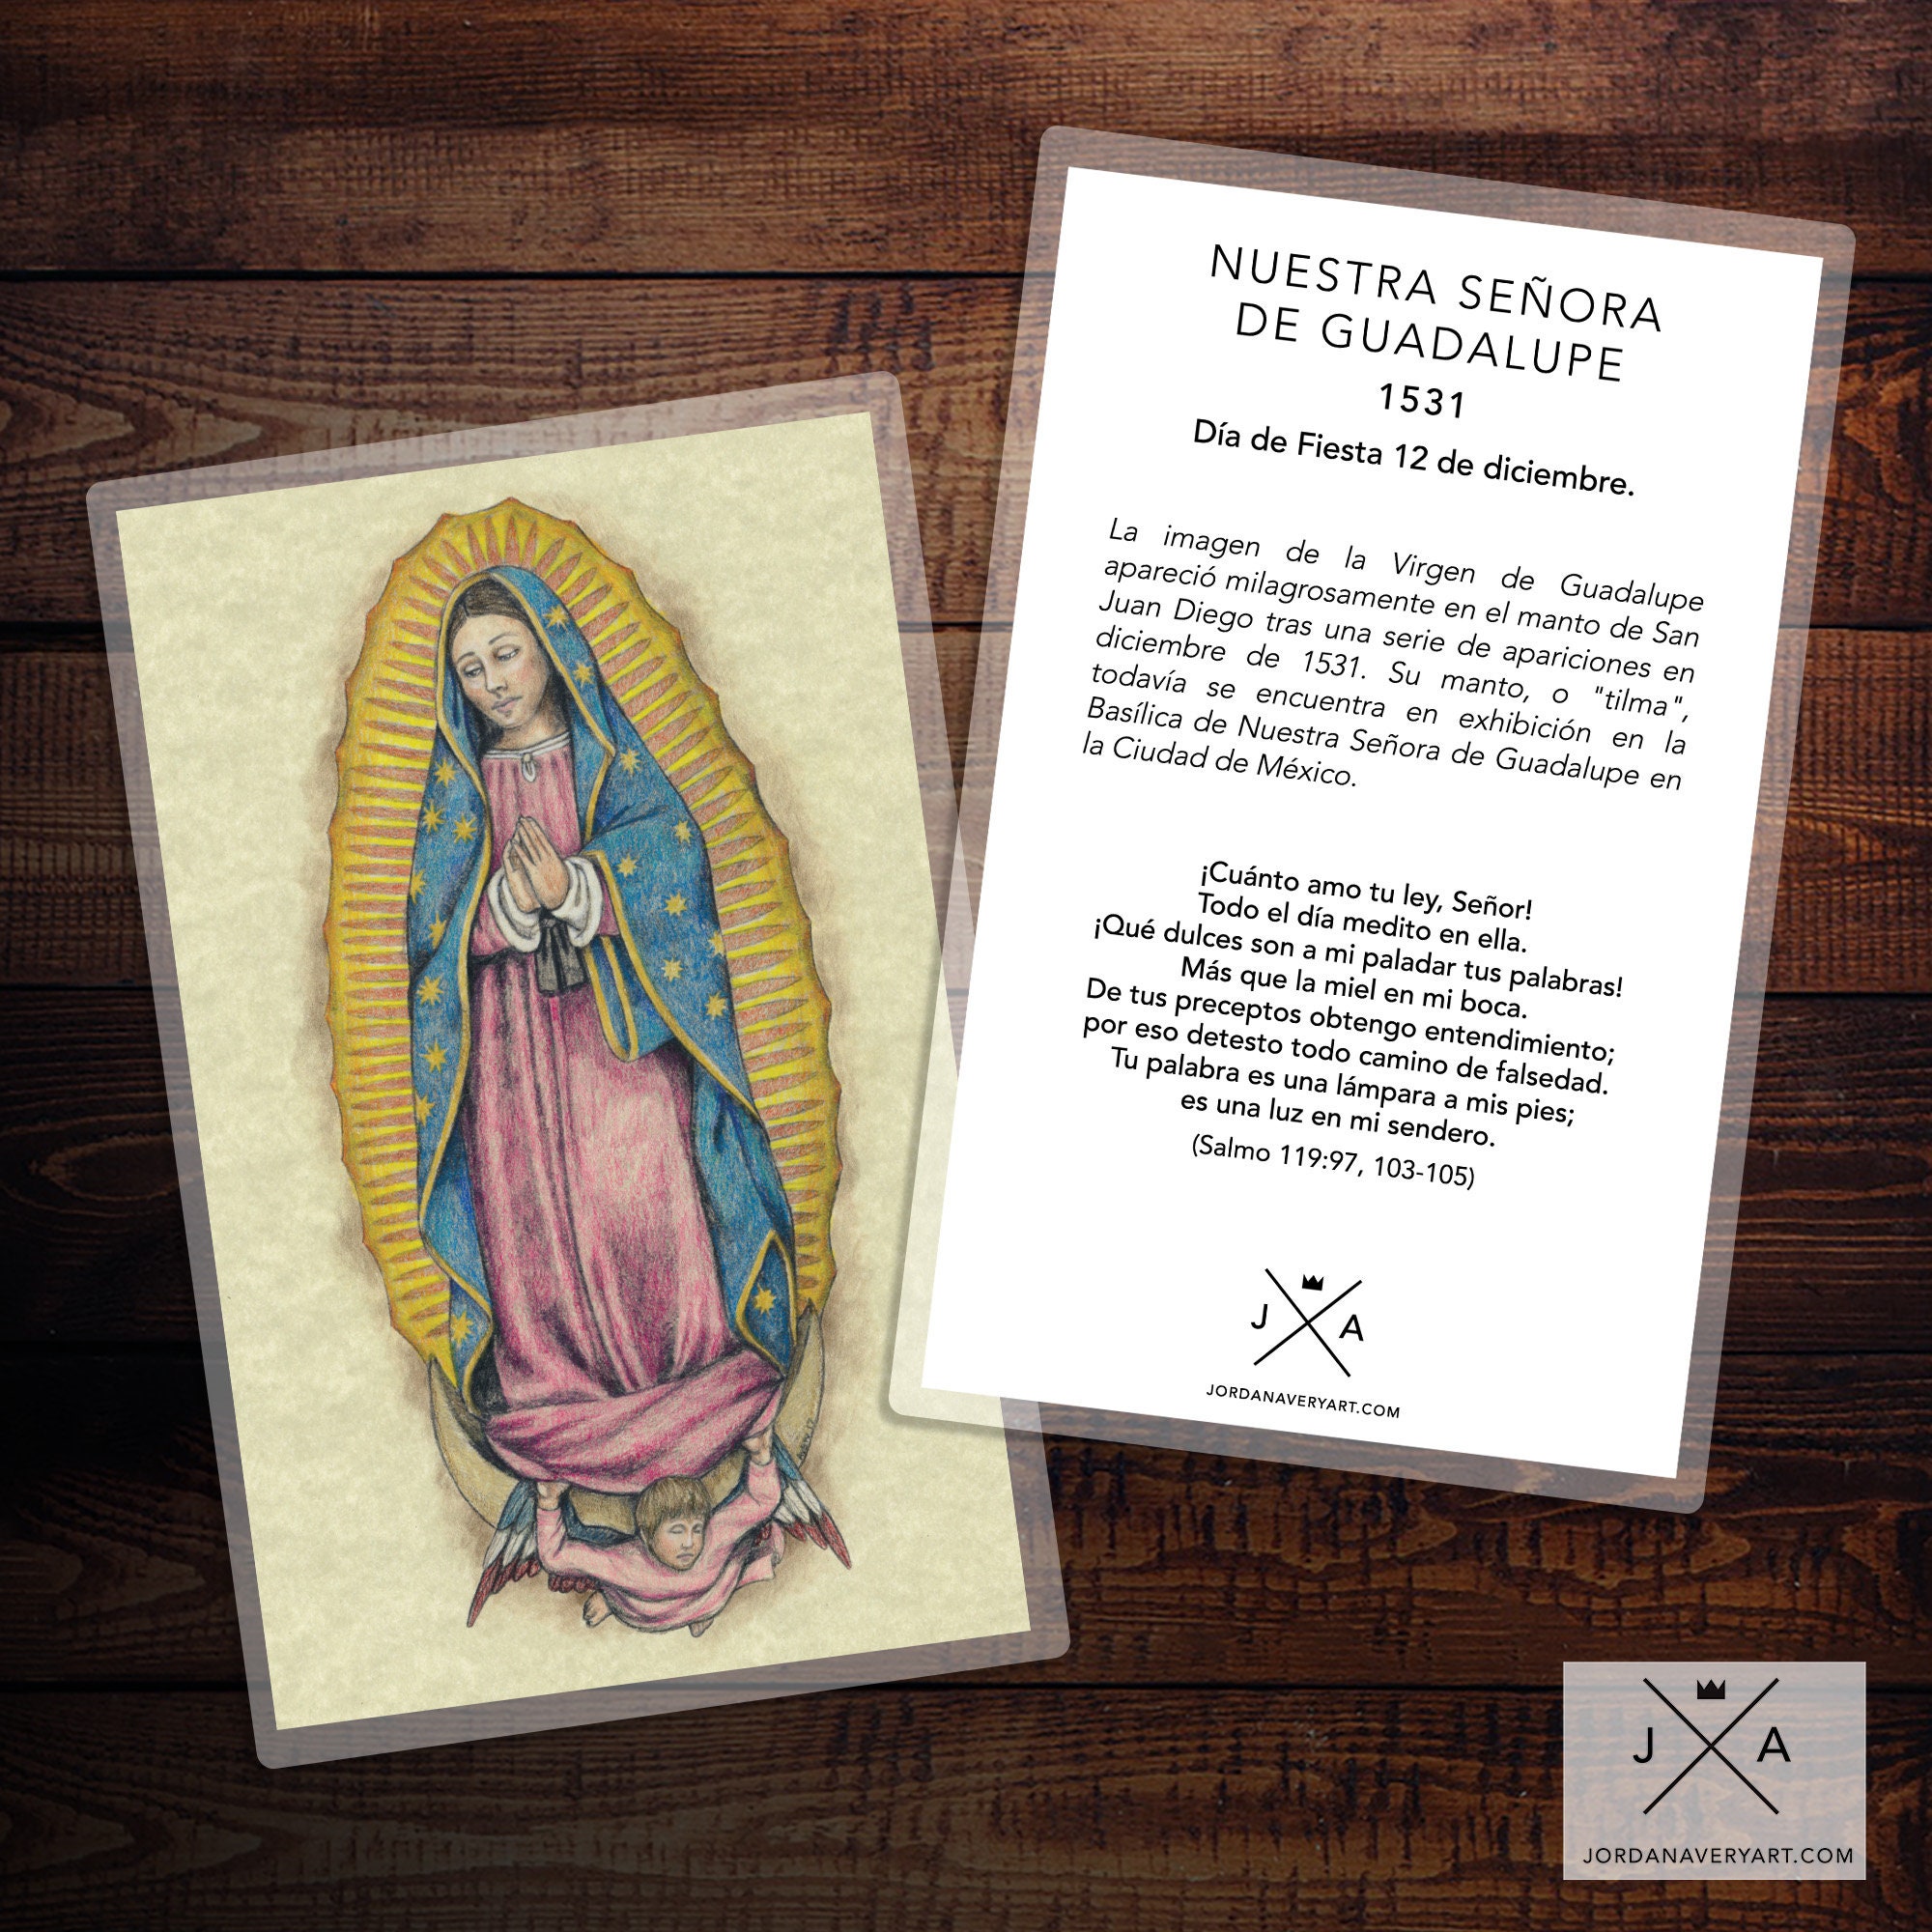 Psalm 91 Prayer Cards in Spanish. Wallet Size Prayer Cards. 